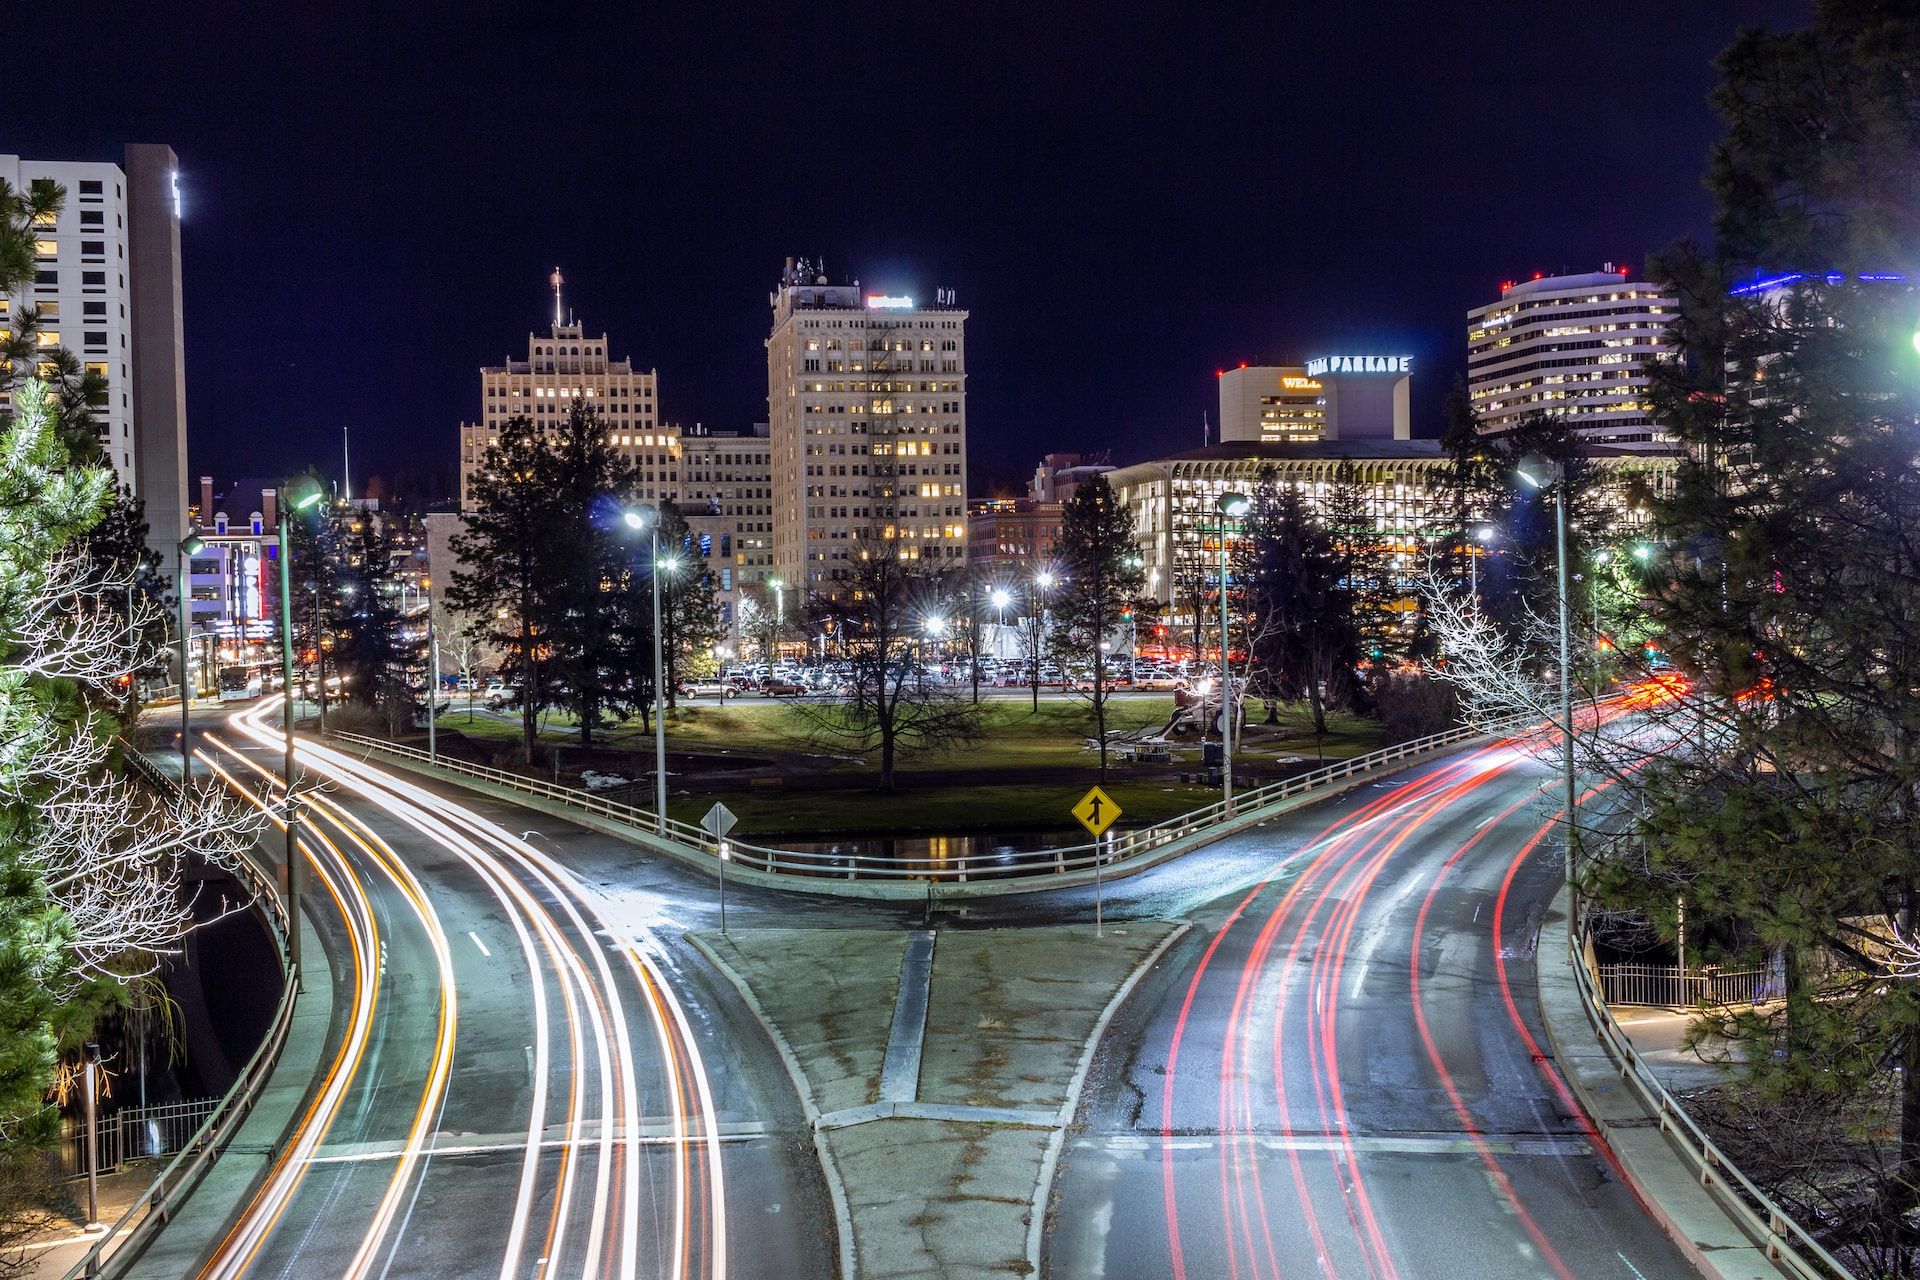 A long exposure photo of Spokane at night.